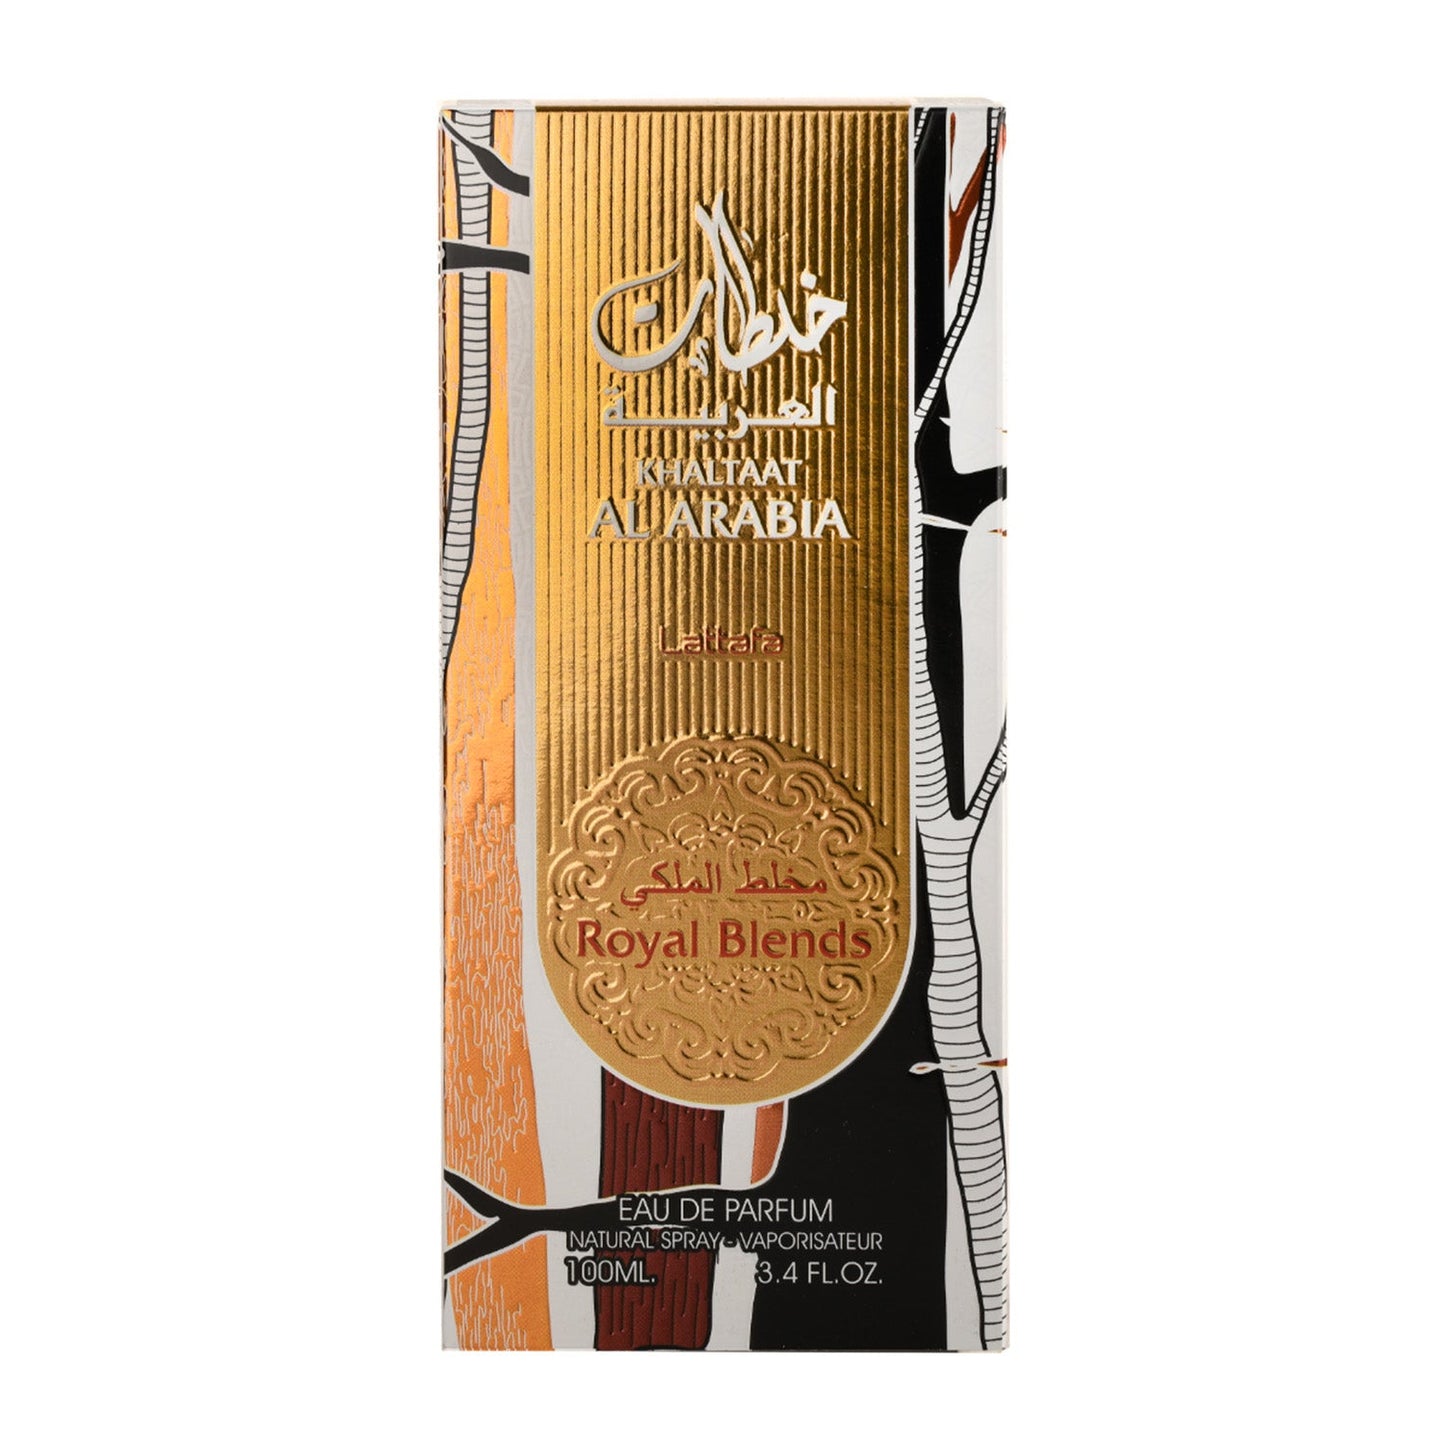 Khaltaat Al Arabia Royal Blends Eau De Parfum 100ml Lattafa-almanaar Islamic Store